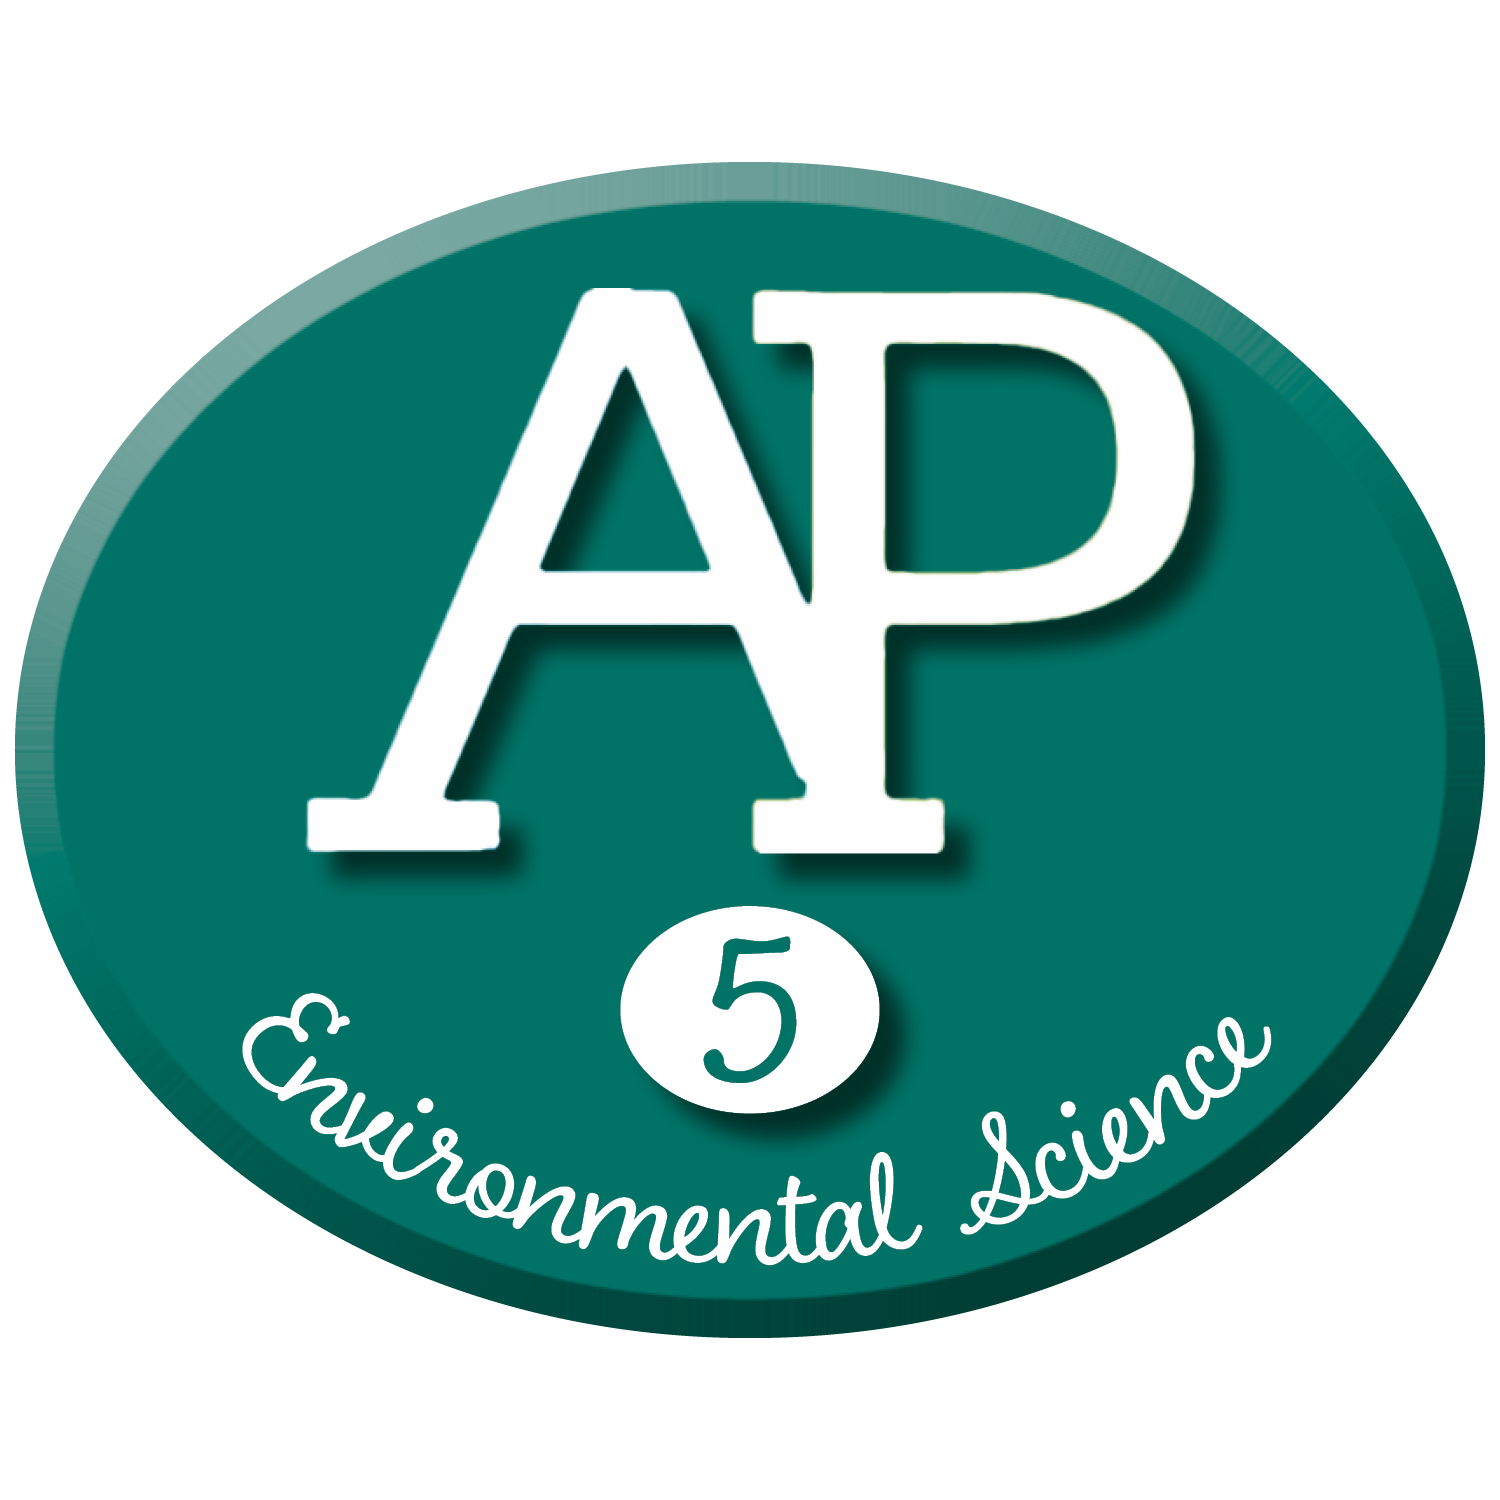 AP 5 Environmental Science